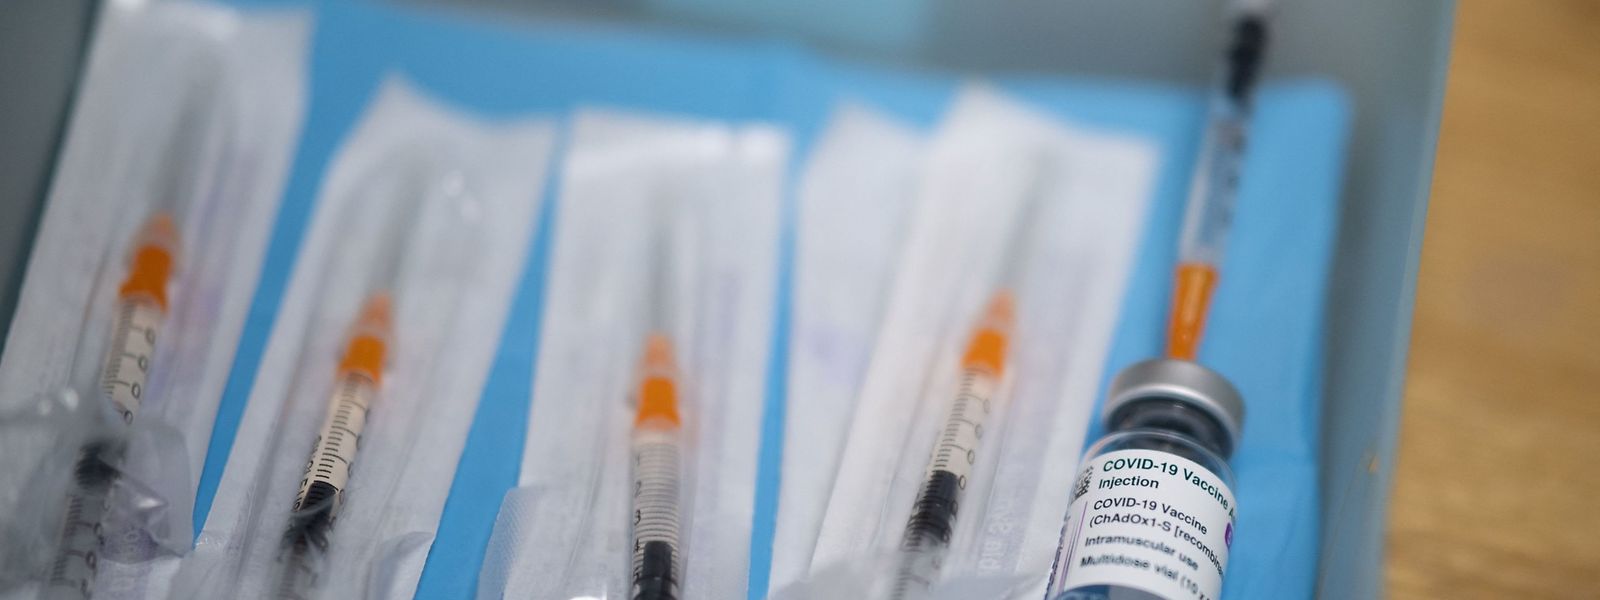 De chaque flacon AstraZeneca, les infirmiers peuvent tirer 10 doses de vaccin anticovid.